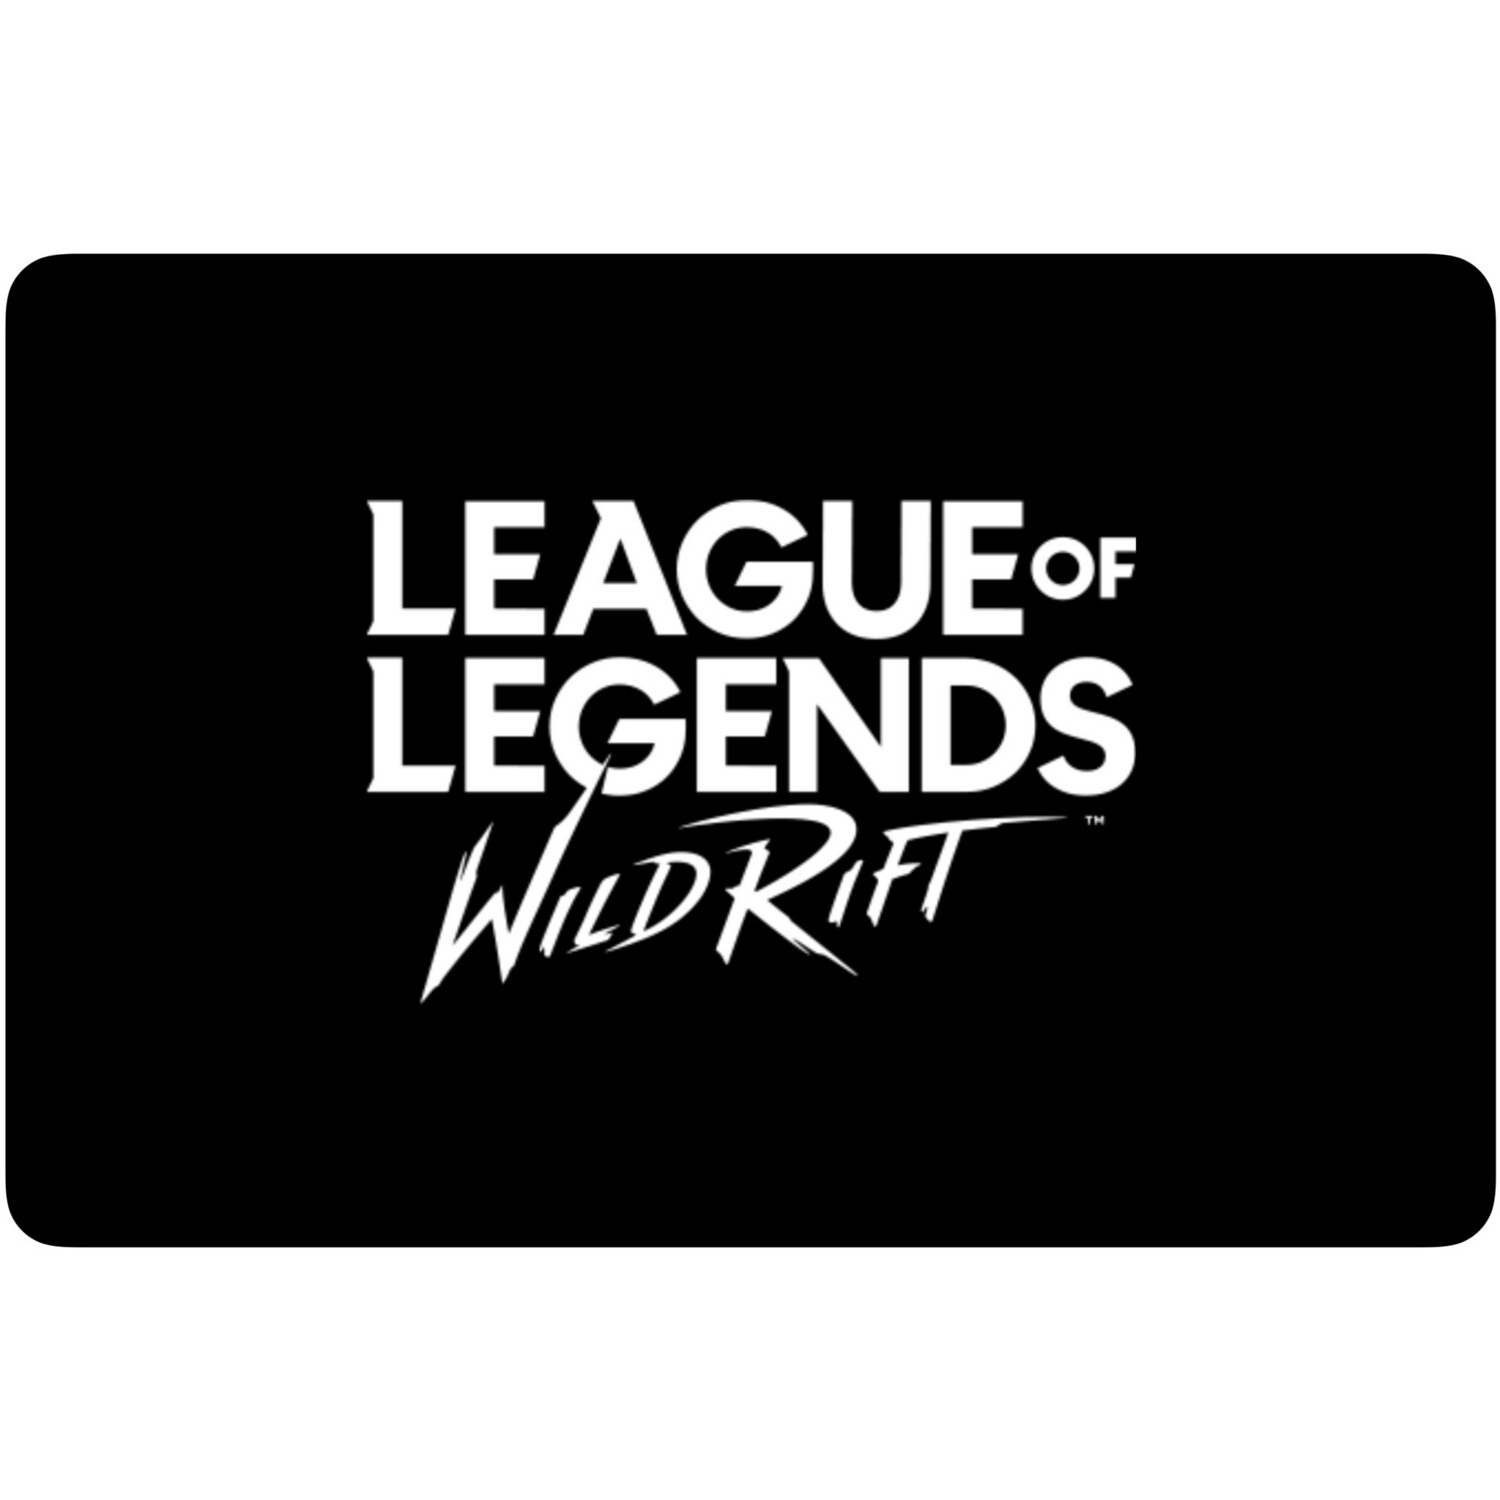 League of Legends Wild Rift Indonesia Top Up